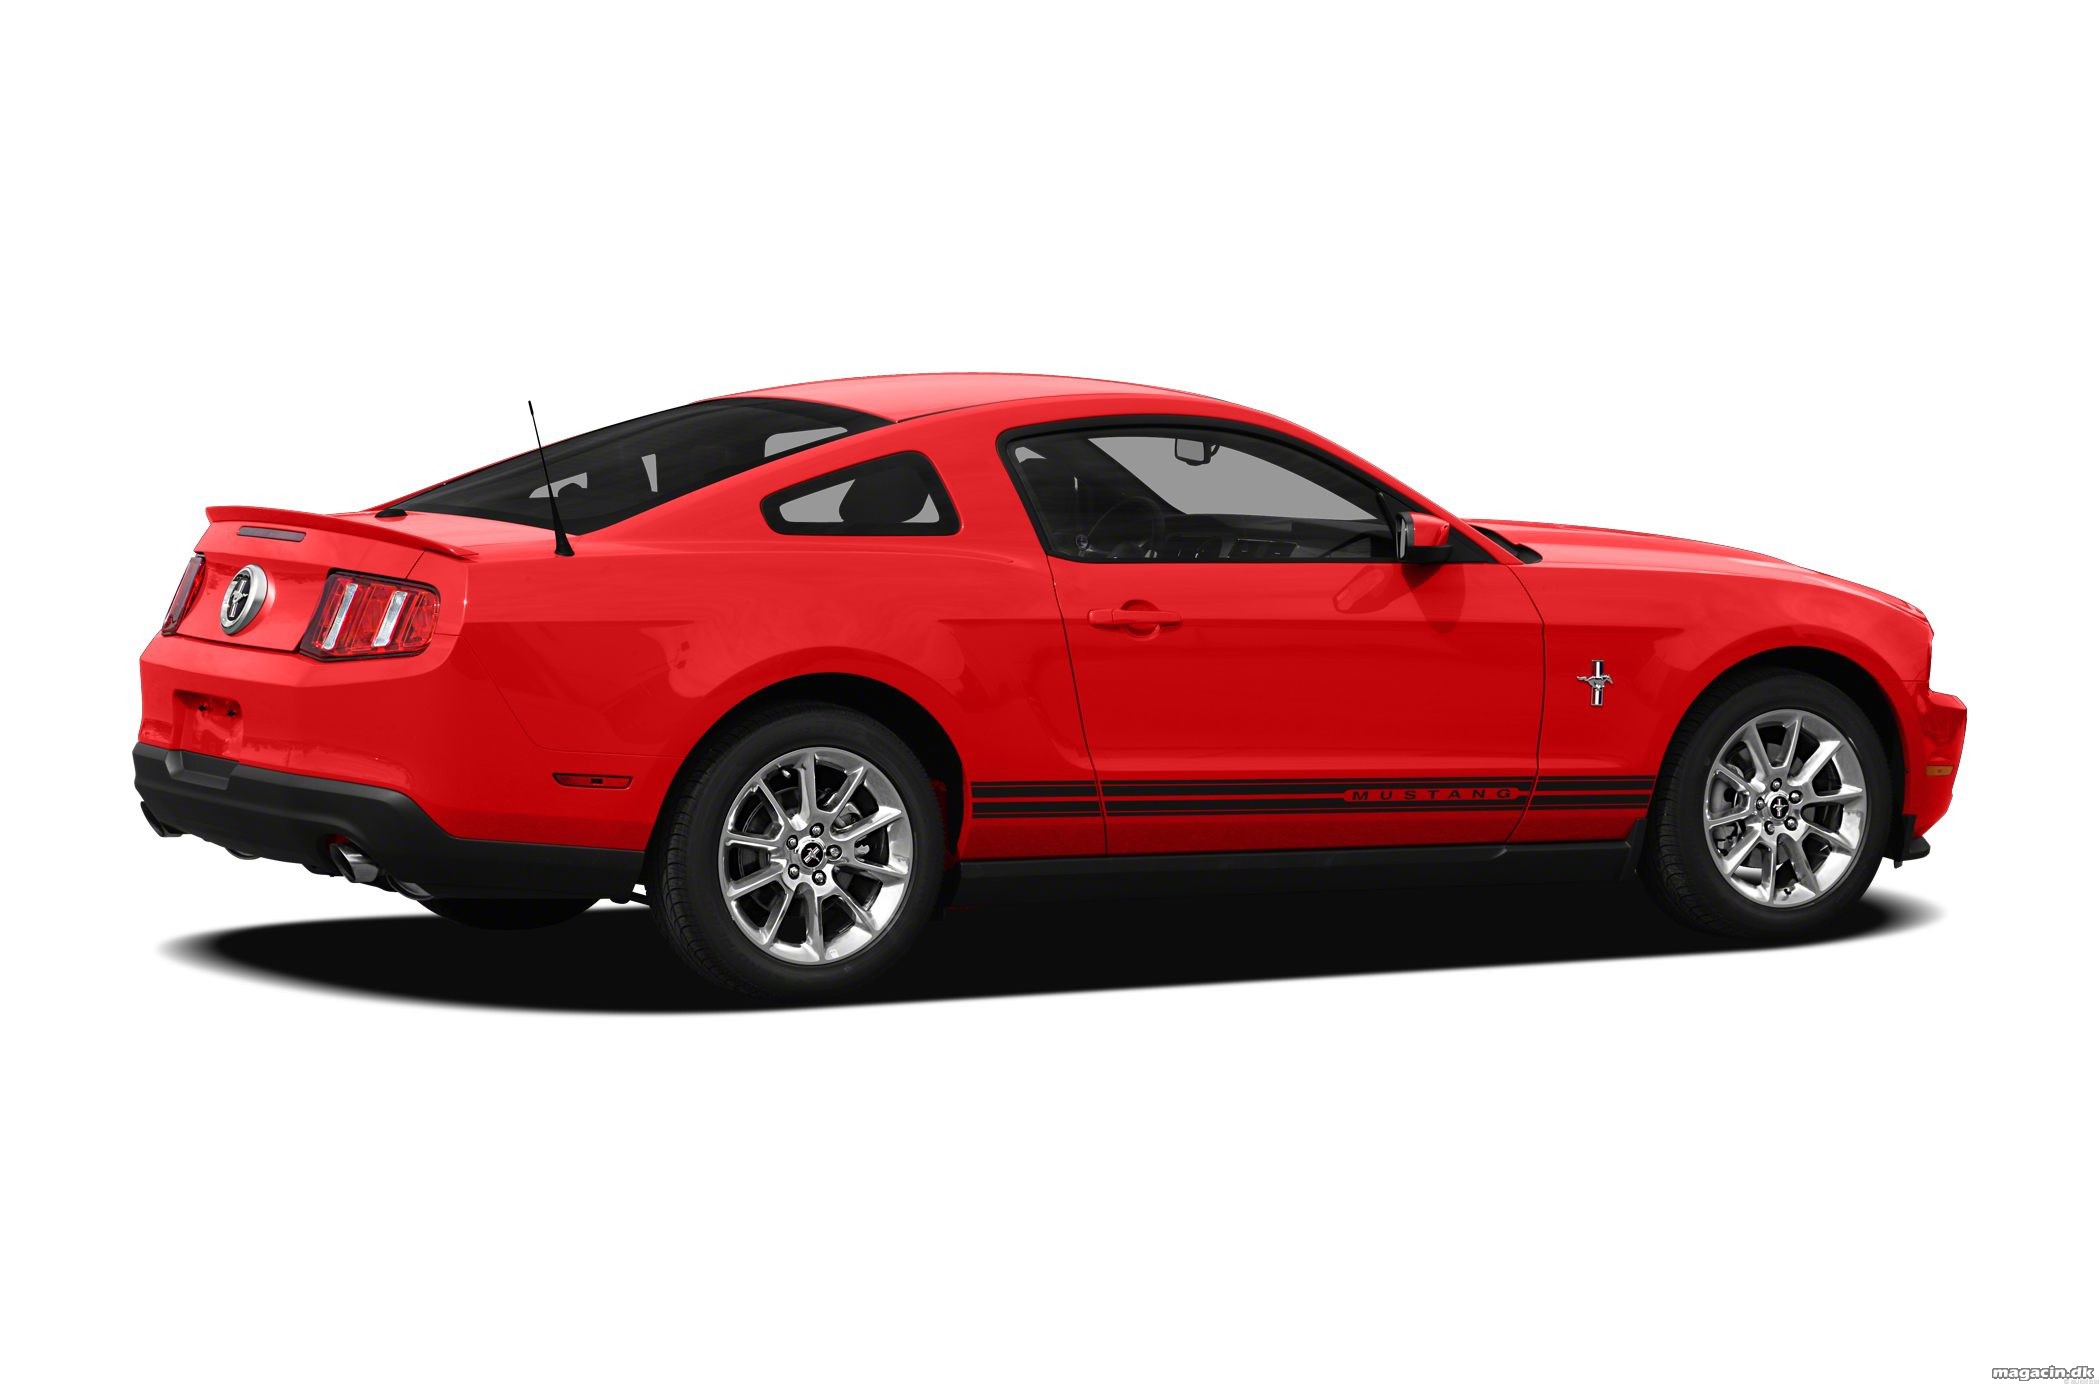 Test: Ford Mustang, vild og hot